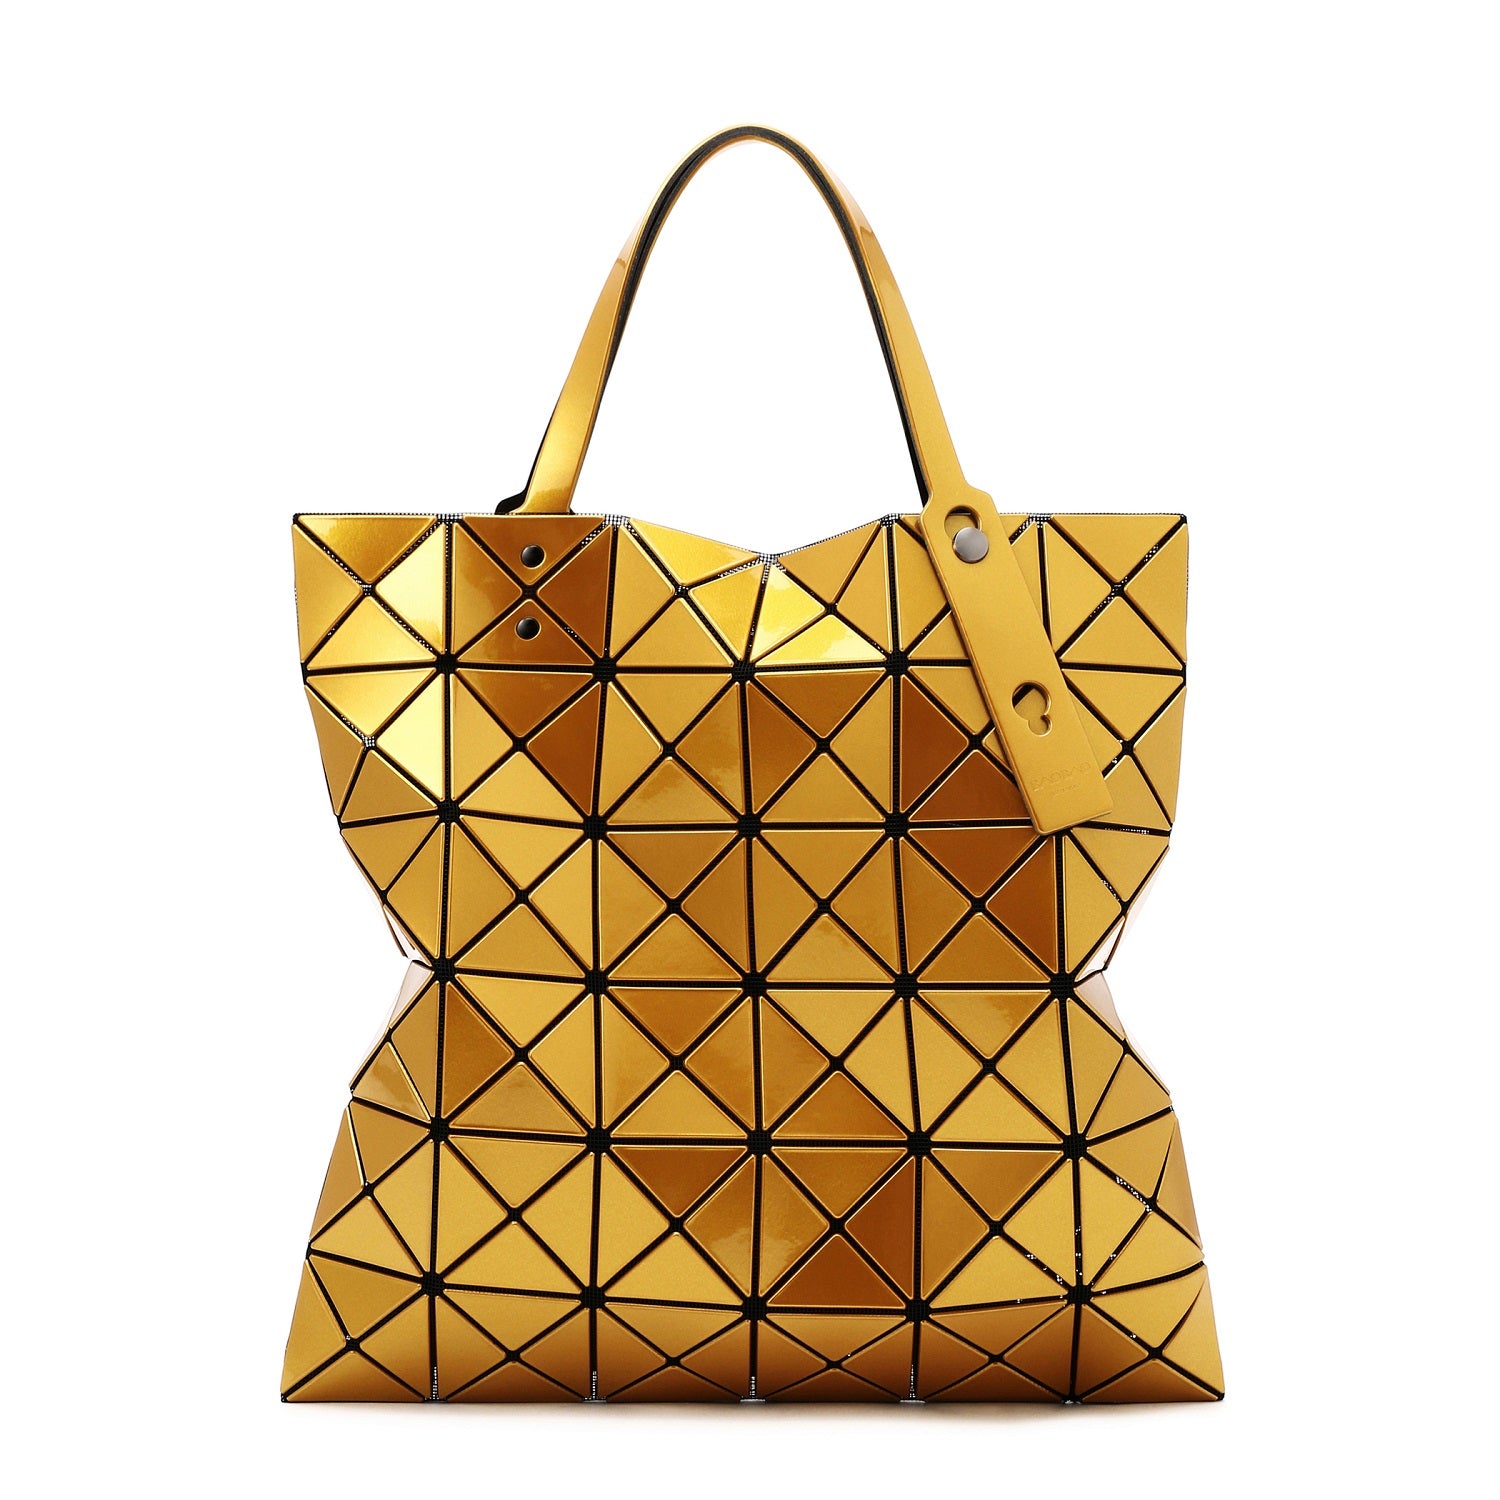 Issey Miyake updates iconic Bao Bao bag with new shapes